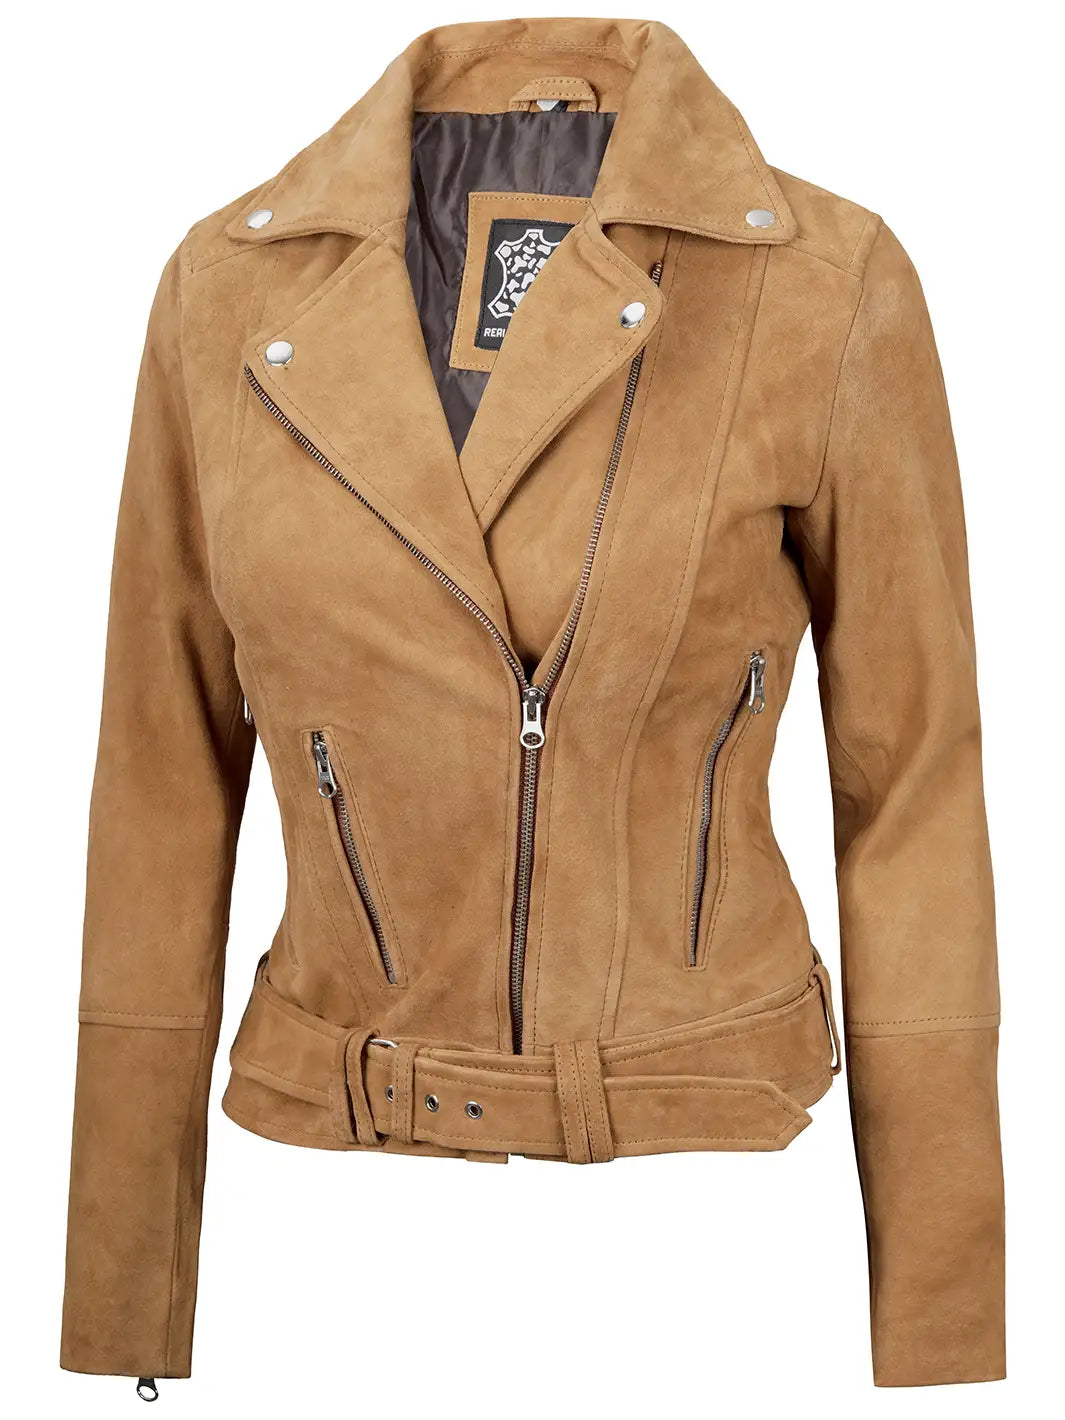 Women suede leather jacket